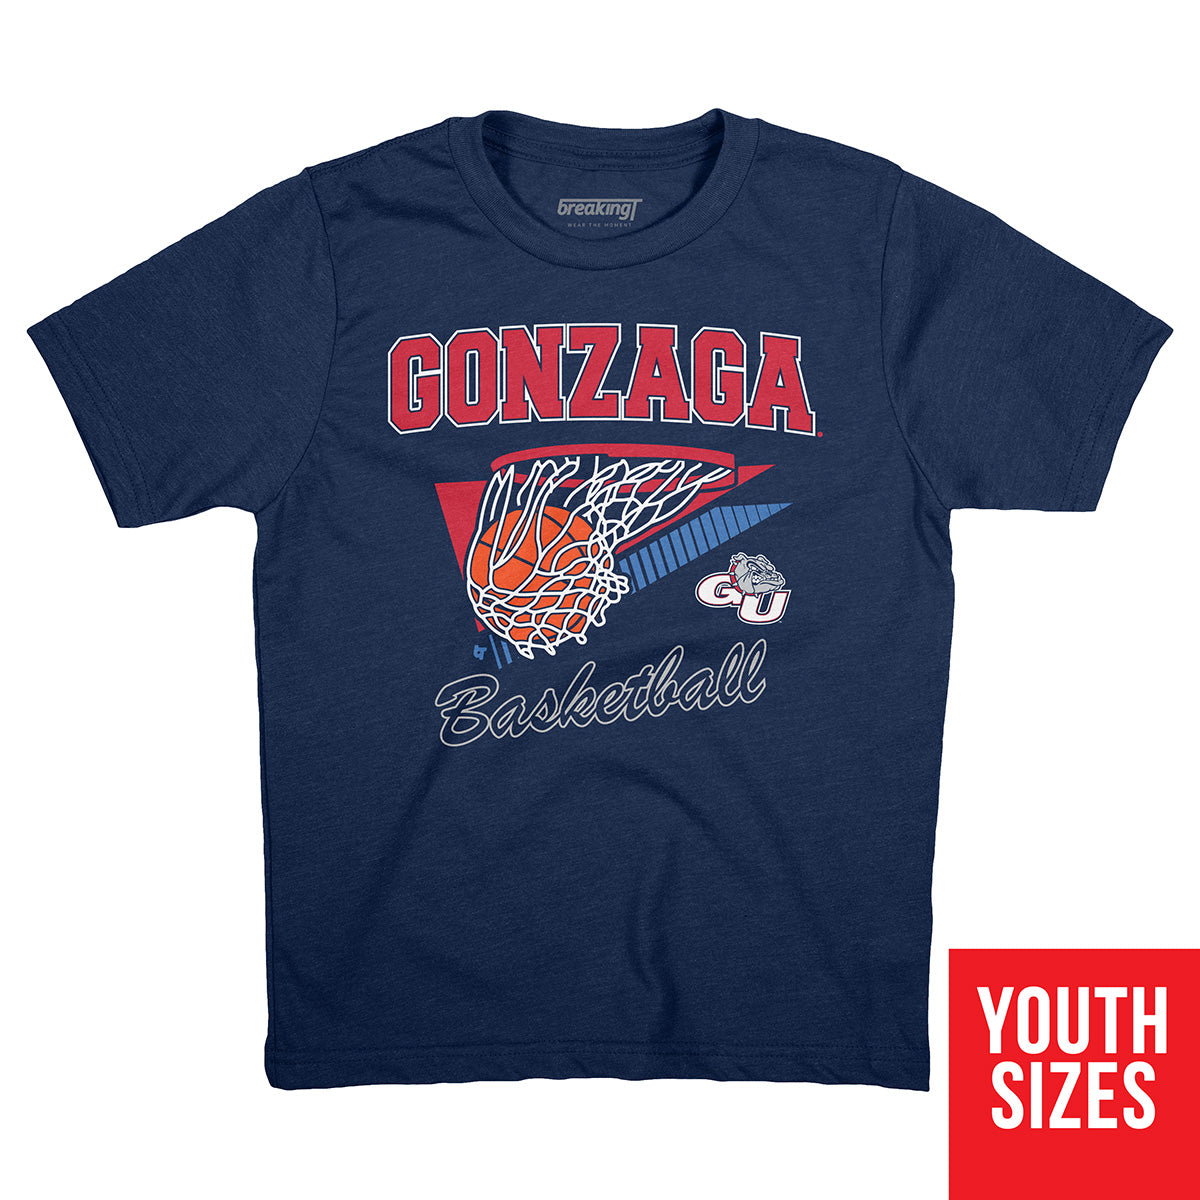 Gonzaga Bulldogs MLB legends jersey